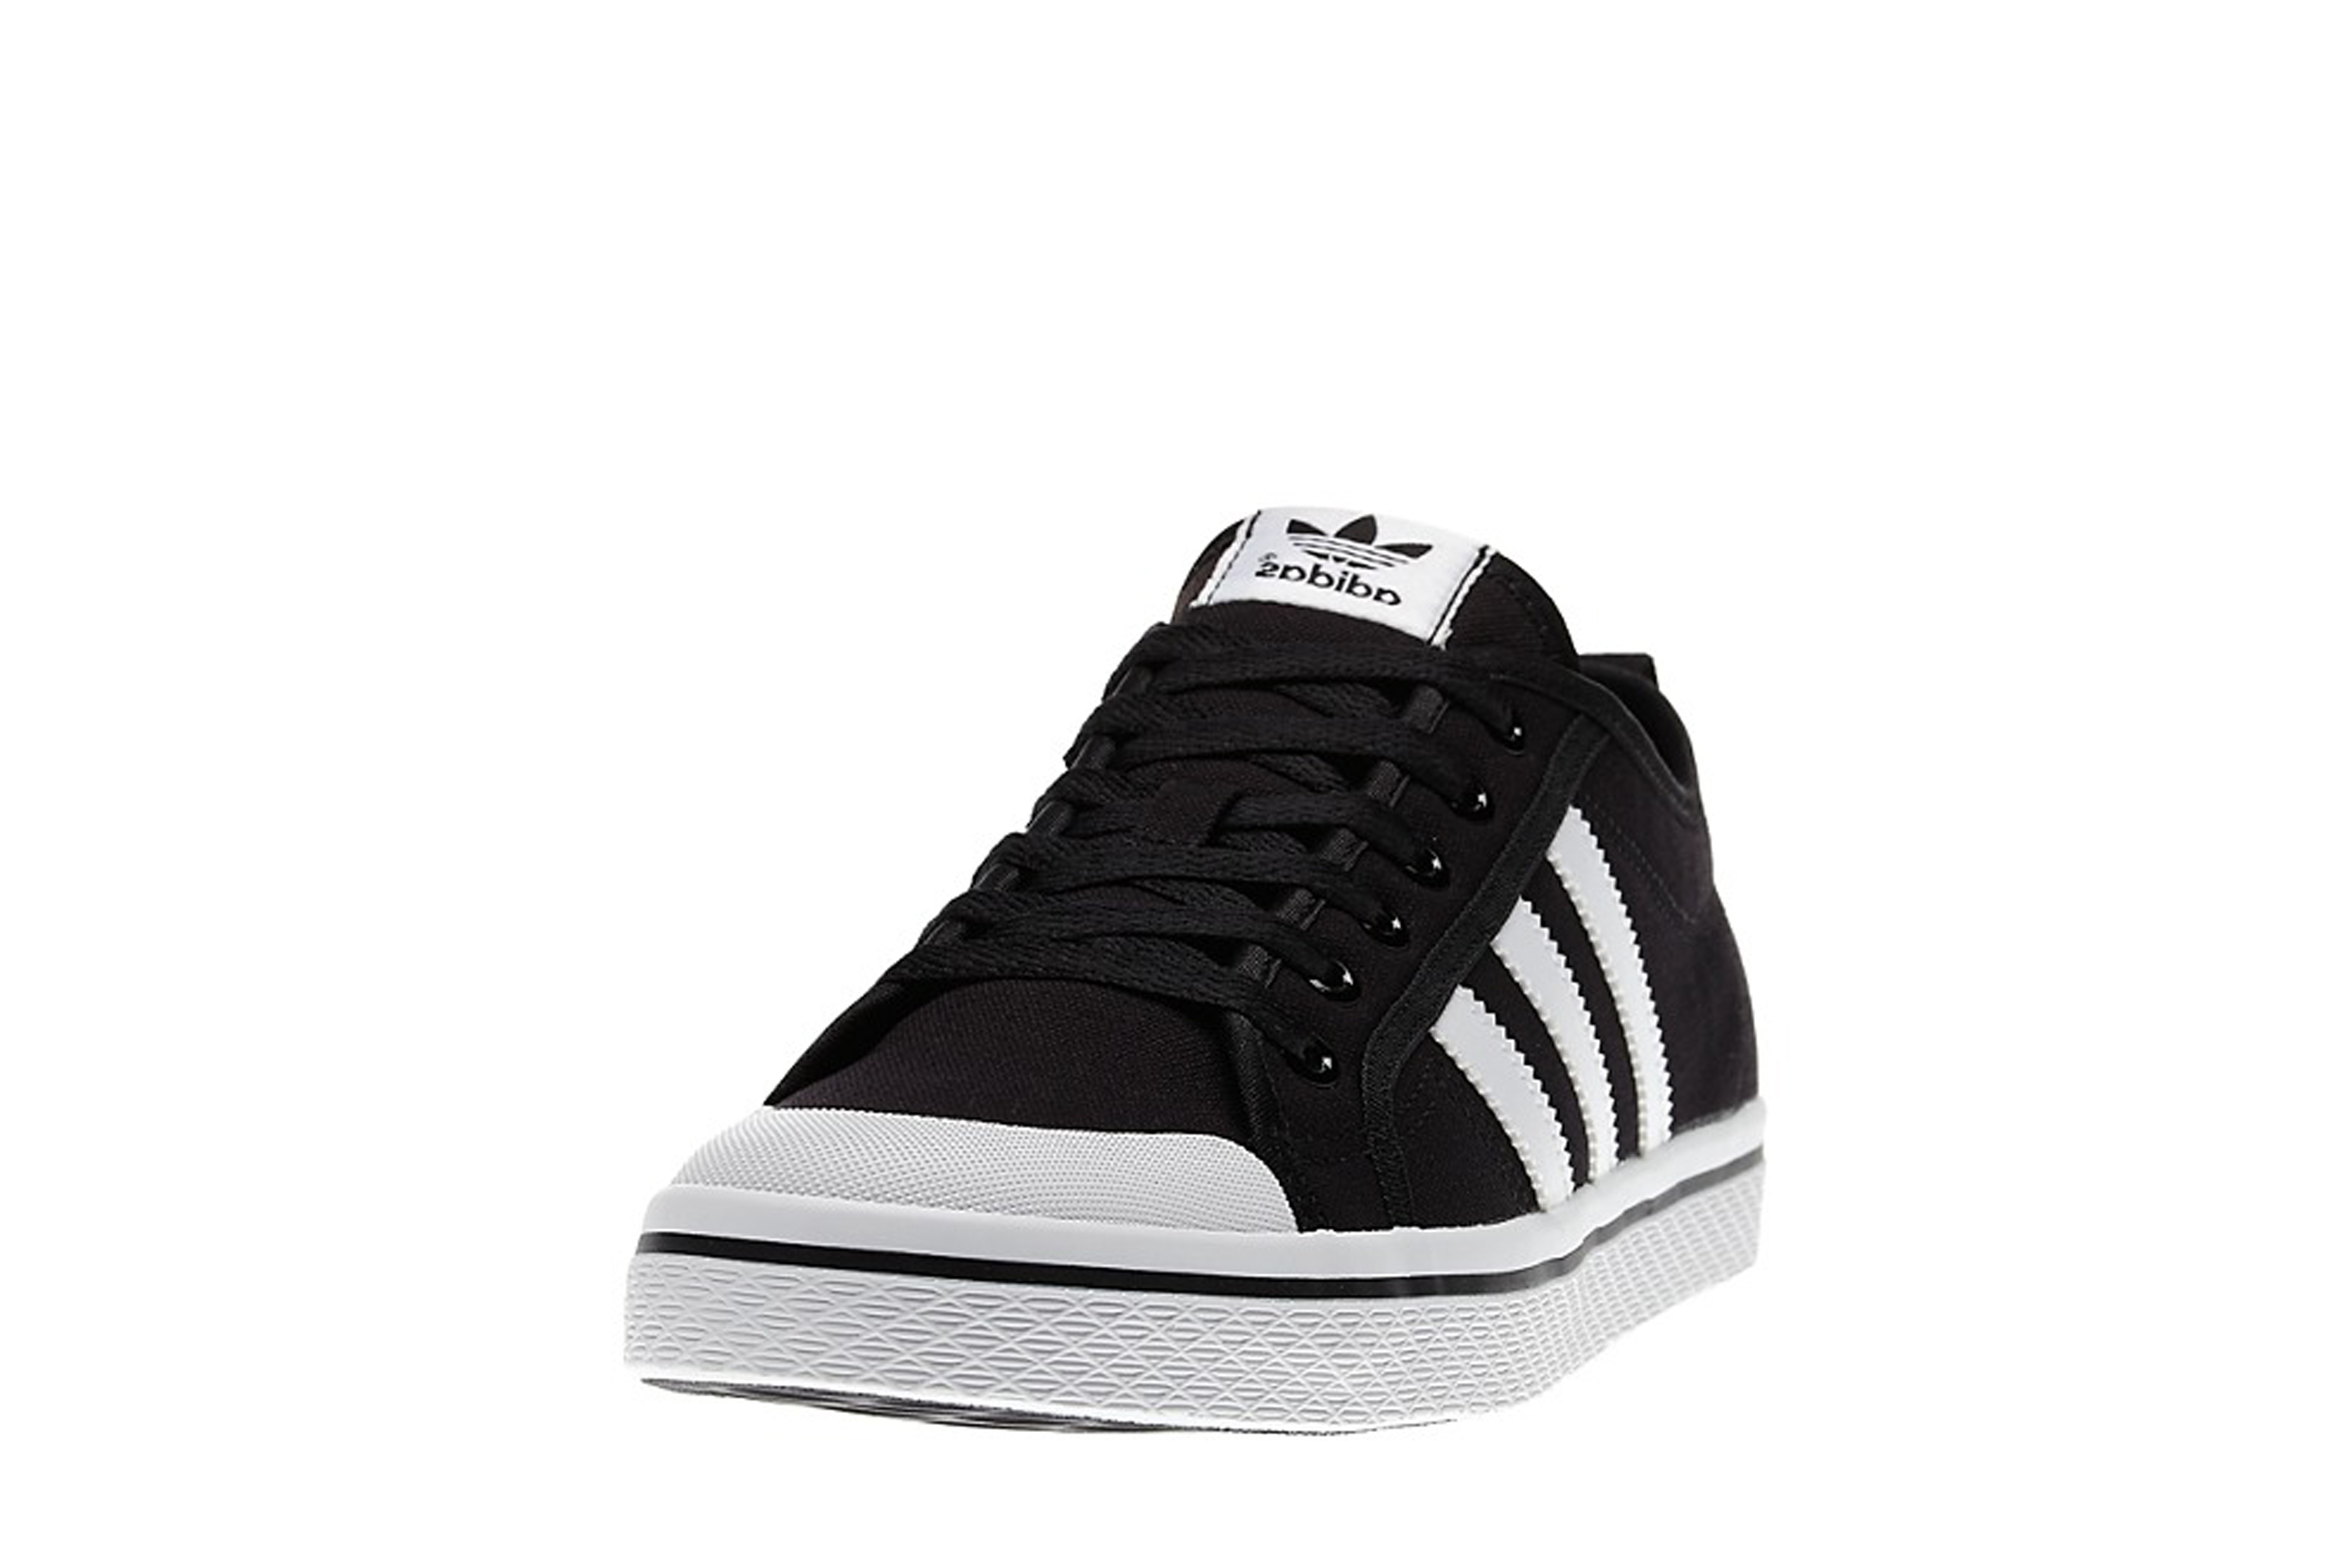 adidas originals Honey Sneakers Black/White/Black